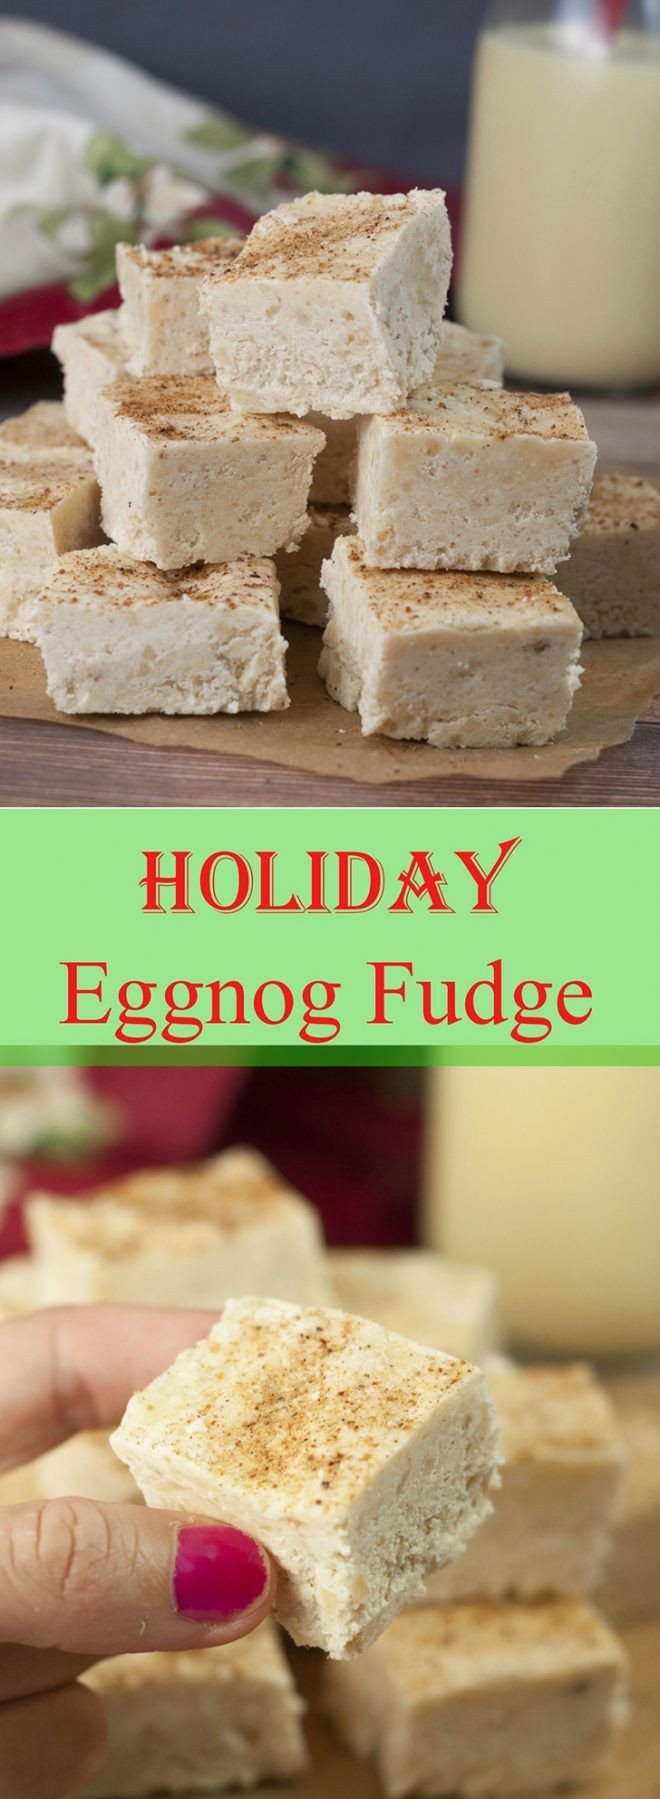 Best Fudge Recipes For Christmas
 Best 25 Eggnog fudge ideas on Pinterest